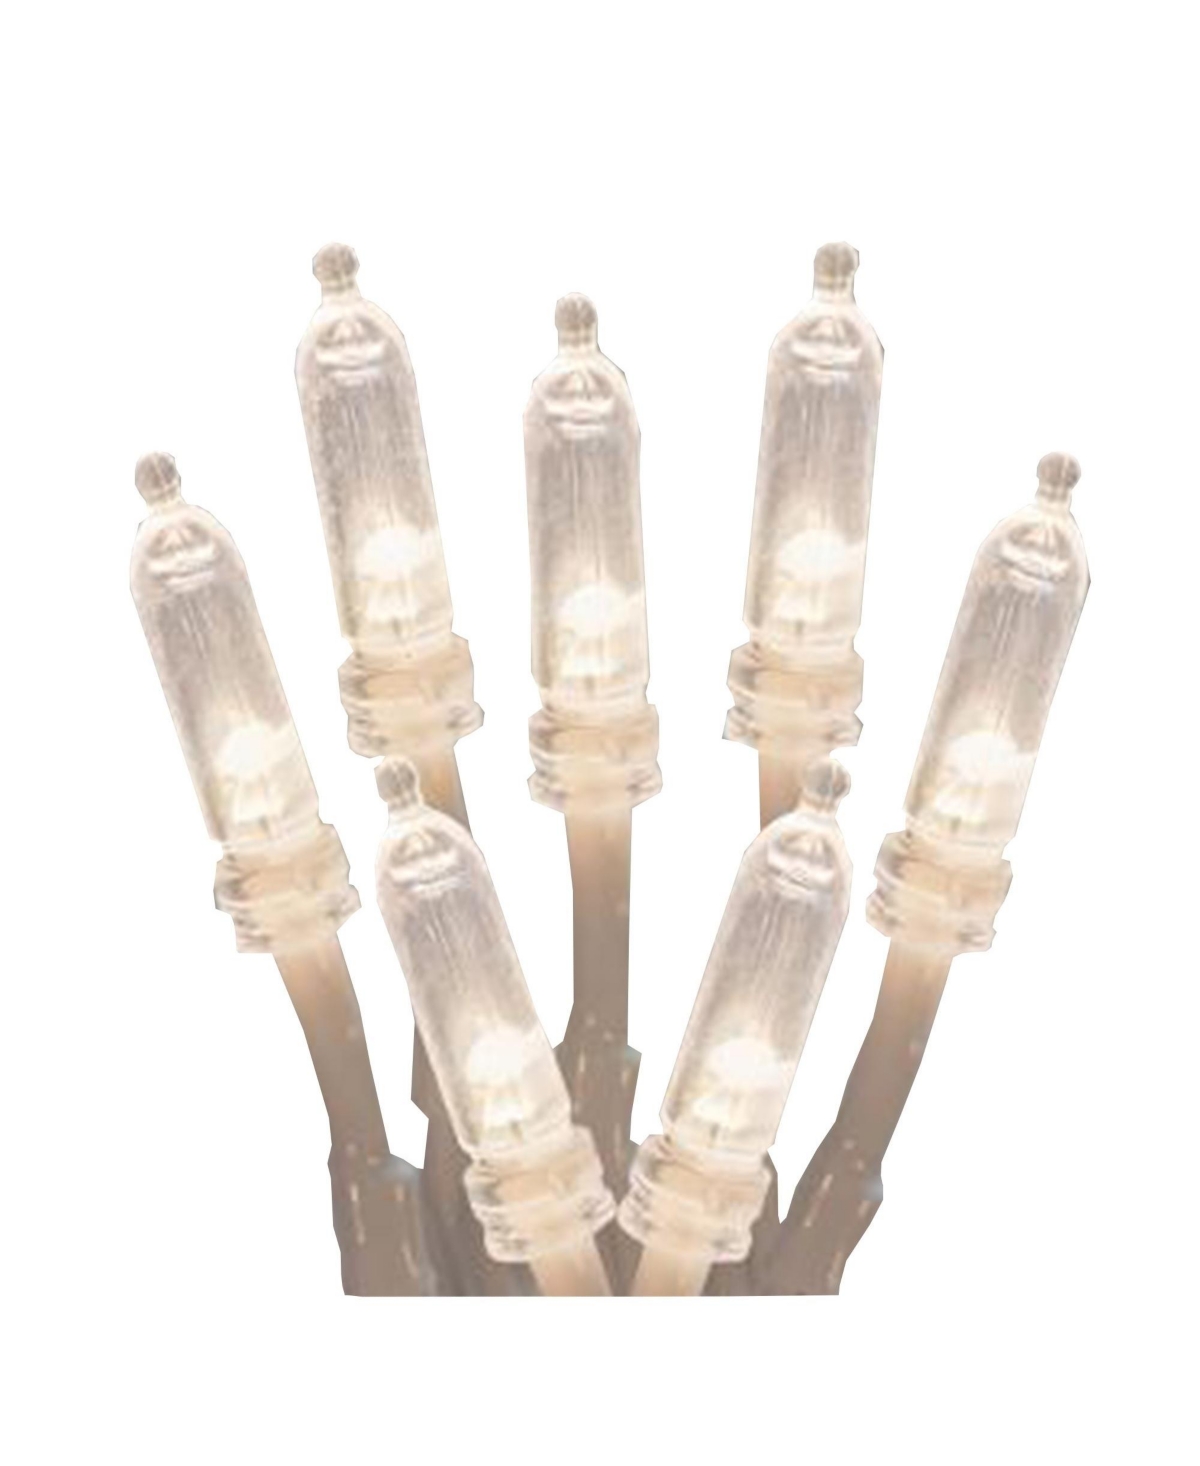 ProductWorks Mini Bulb Cool White Led Light String, 32-Feet, 150 bulbs - White